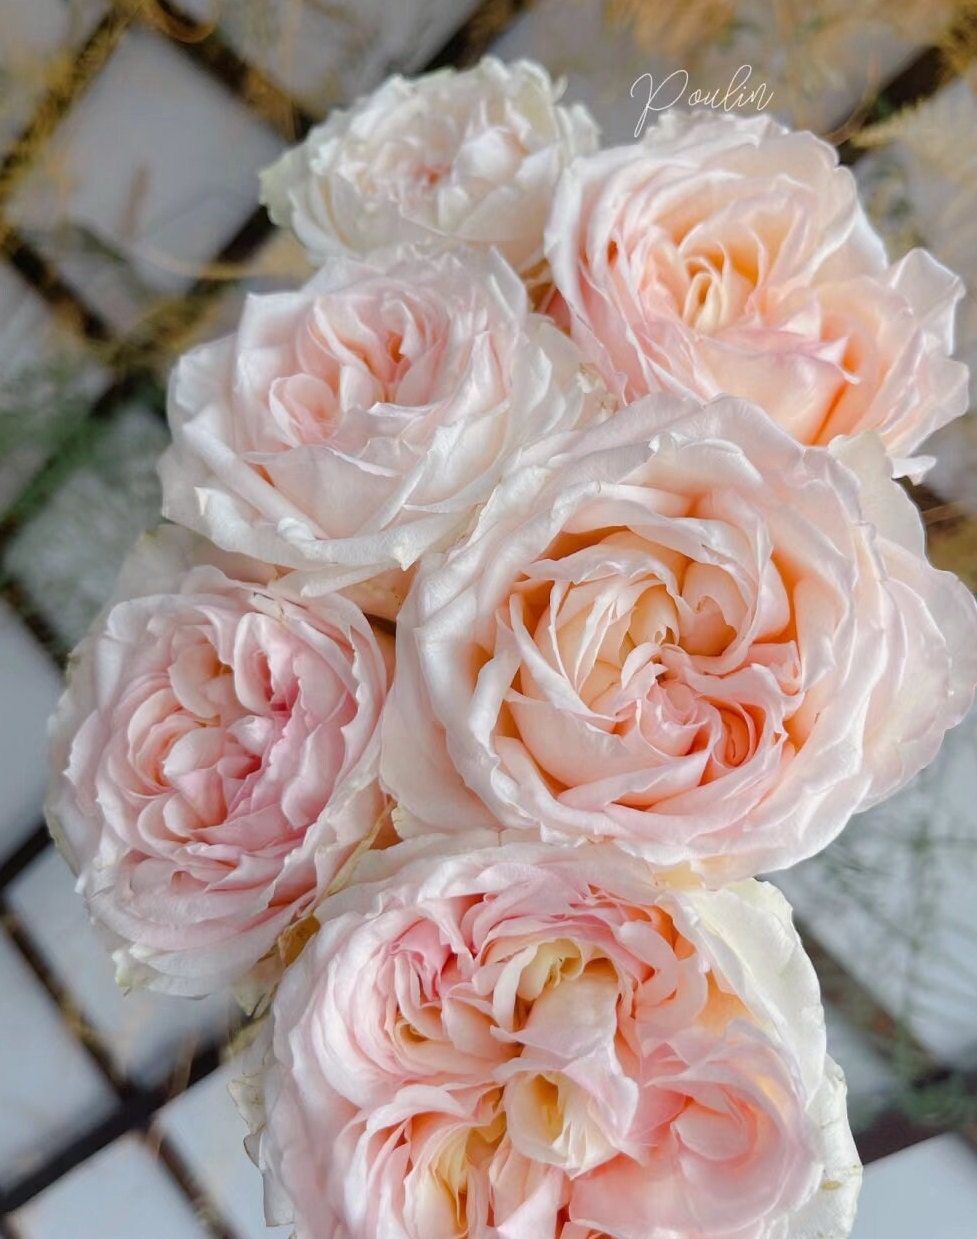 Rose 'Victorian Peach' (维多利亚蜜桃) (1 Gal Live Plant) Shrub Rose